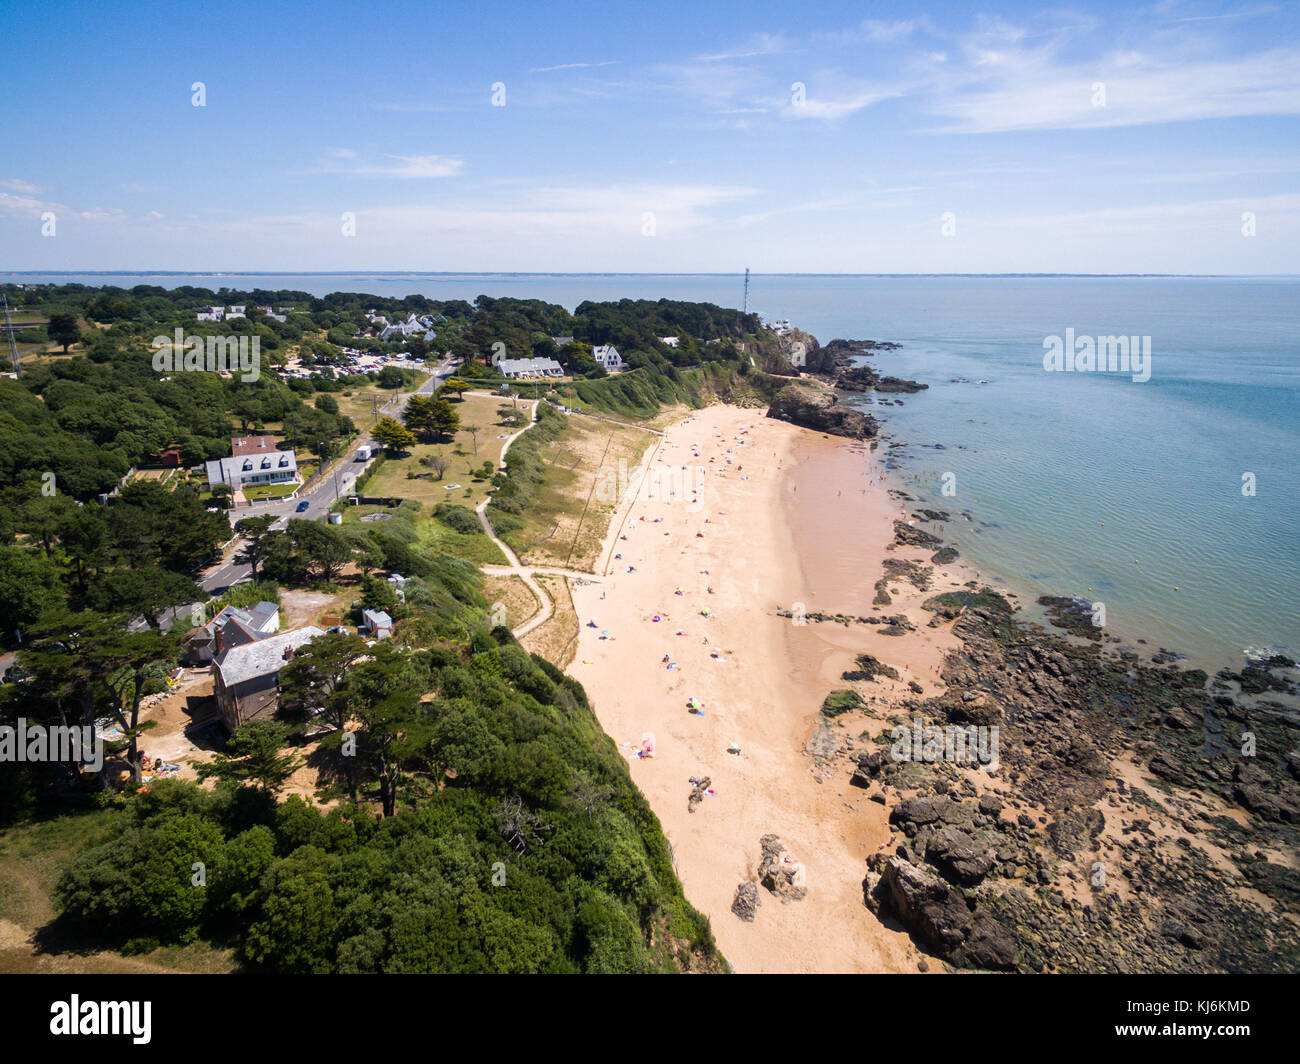 Saint-Nazaire (north-western France): Les Jaunais Beach along the coasts of Saint-Nazaire with the 'pointe de Chemoulin' headland in the background Stock Photo